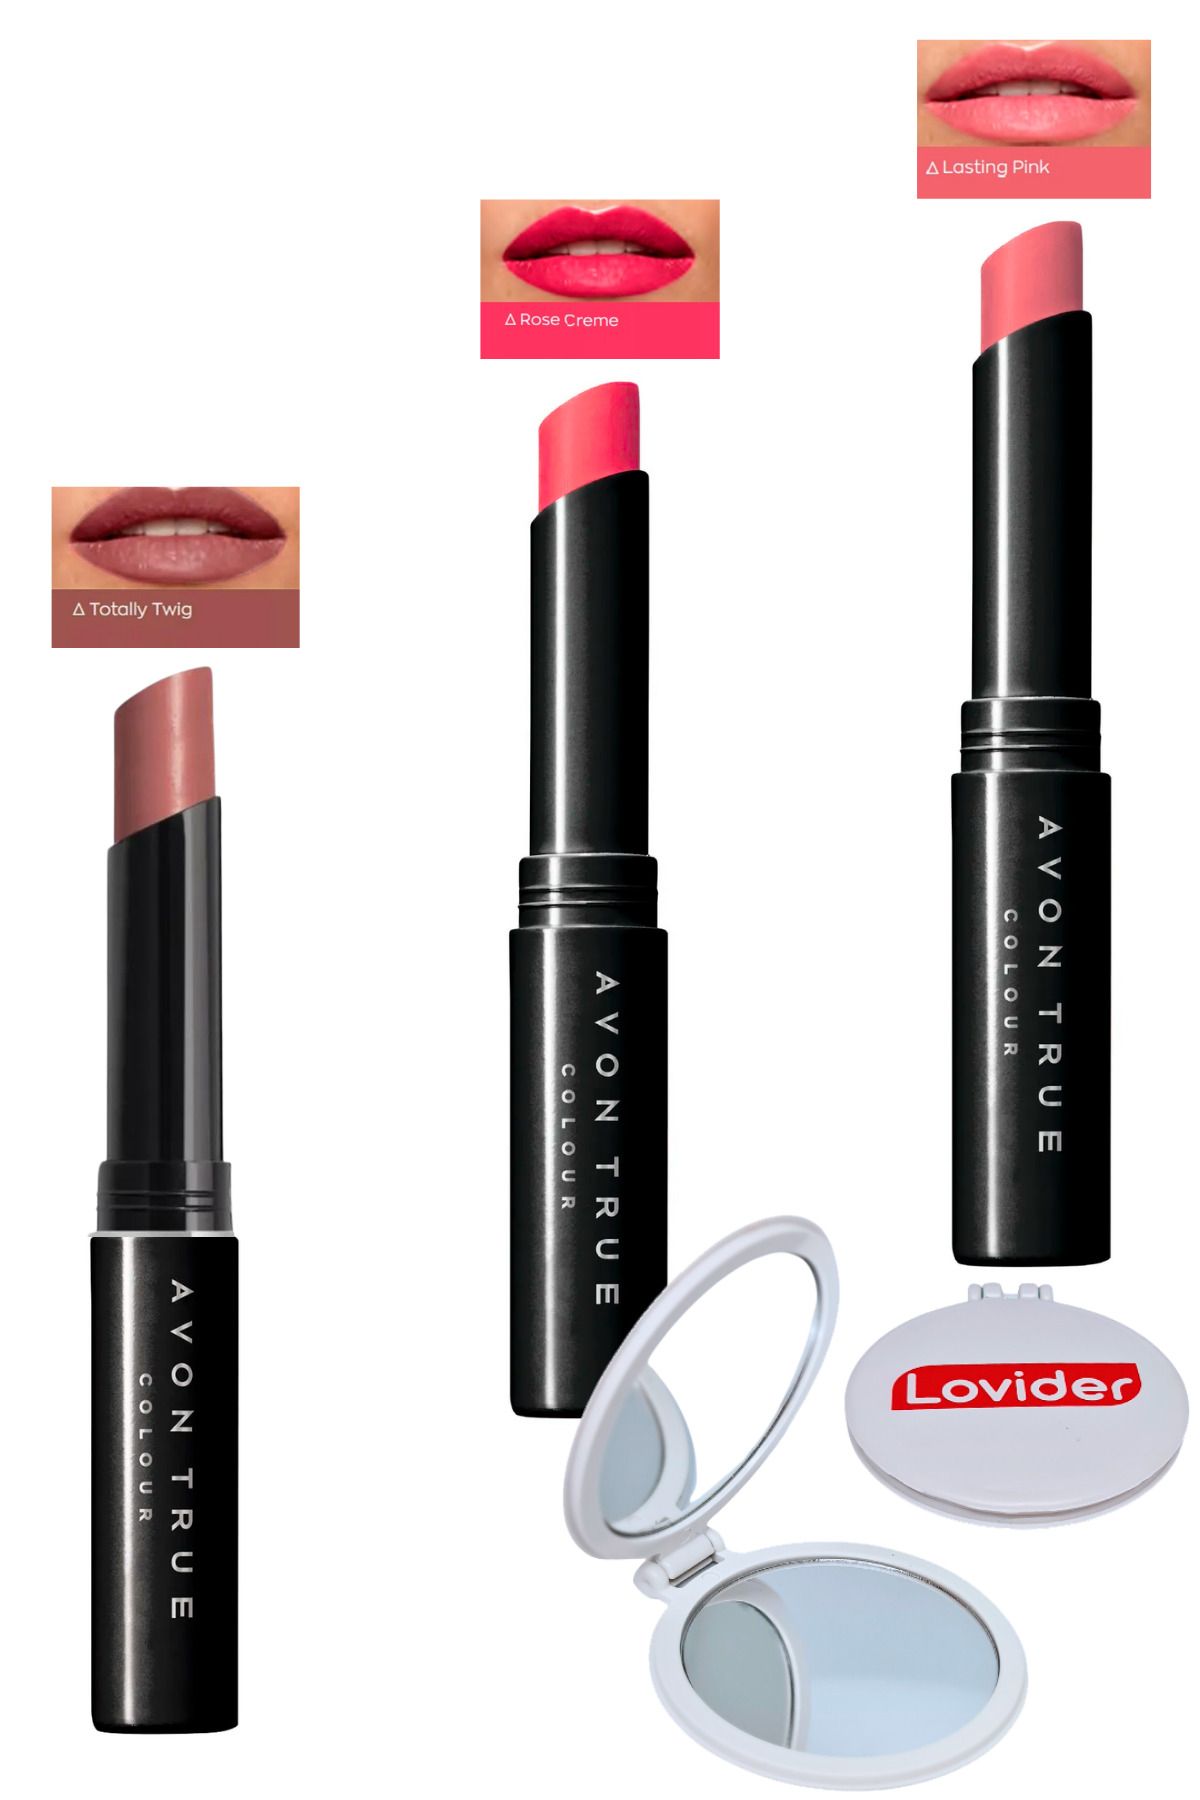 Avon Beauty 3'lü Ruj Paketi - Totally Twig + Rose Creme + Lasting Pink + Lovider Cep Aynası